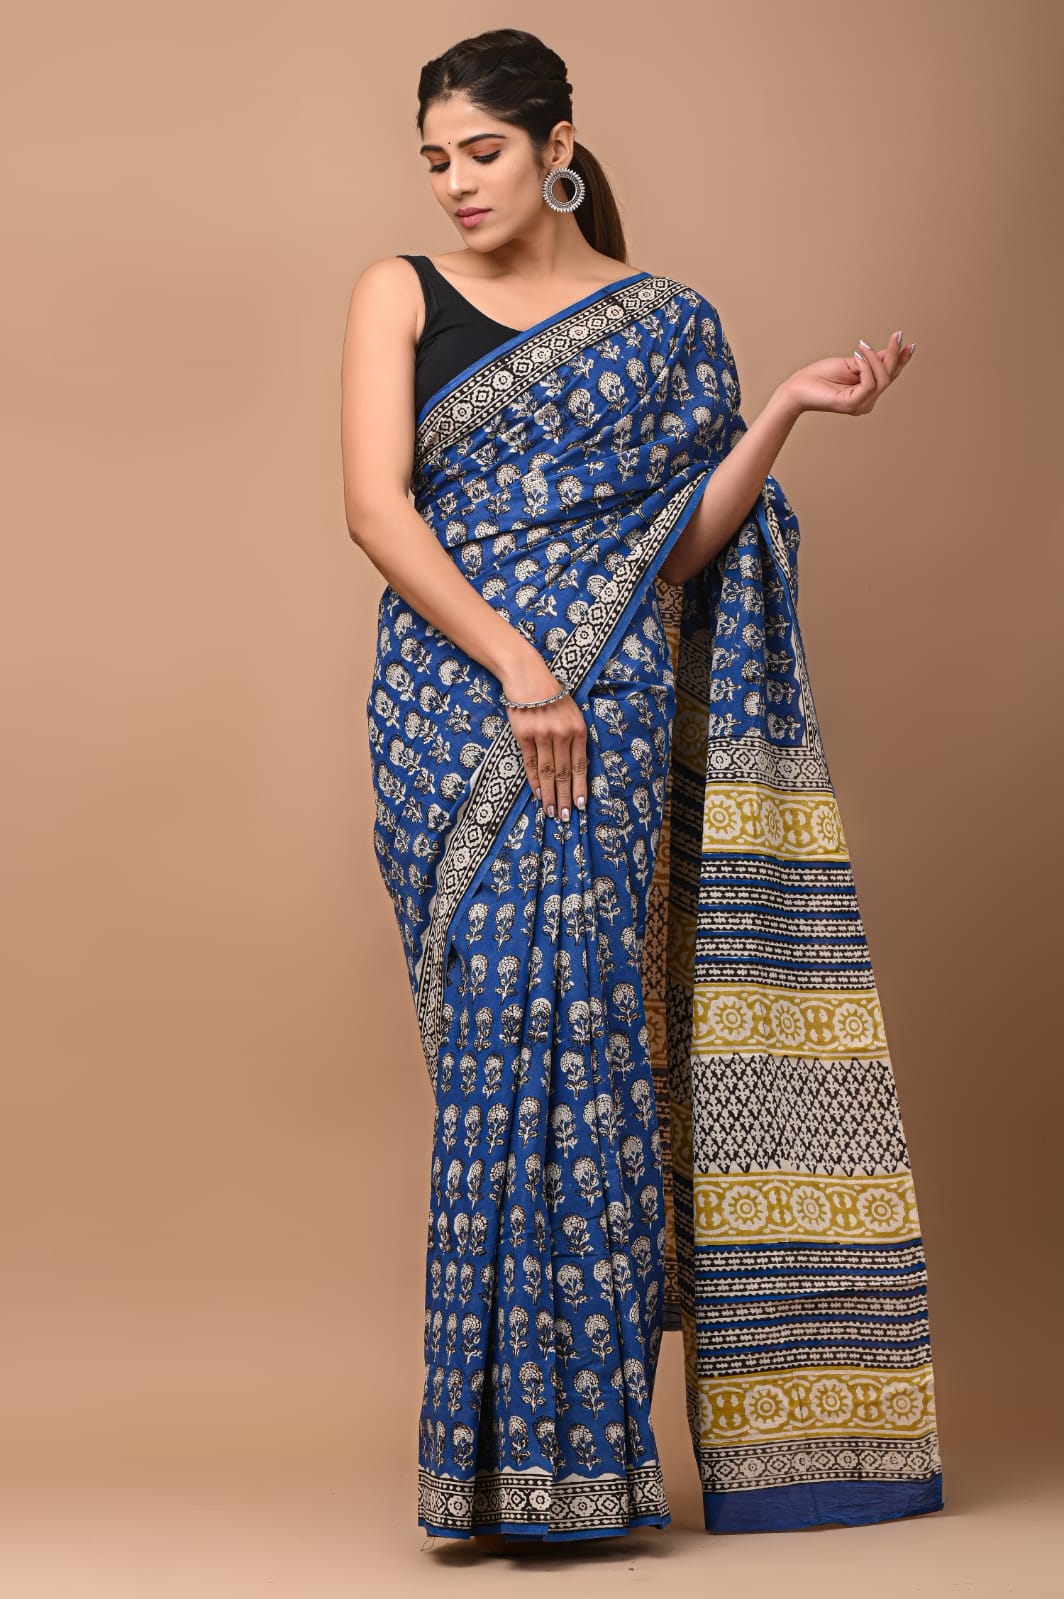 Buy GoSriKi Women's Silk Saree (DEVSENA Navy Pink Blue) at Amazon.in